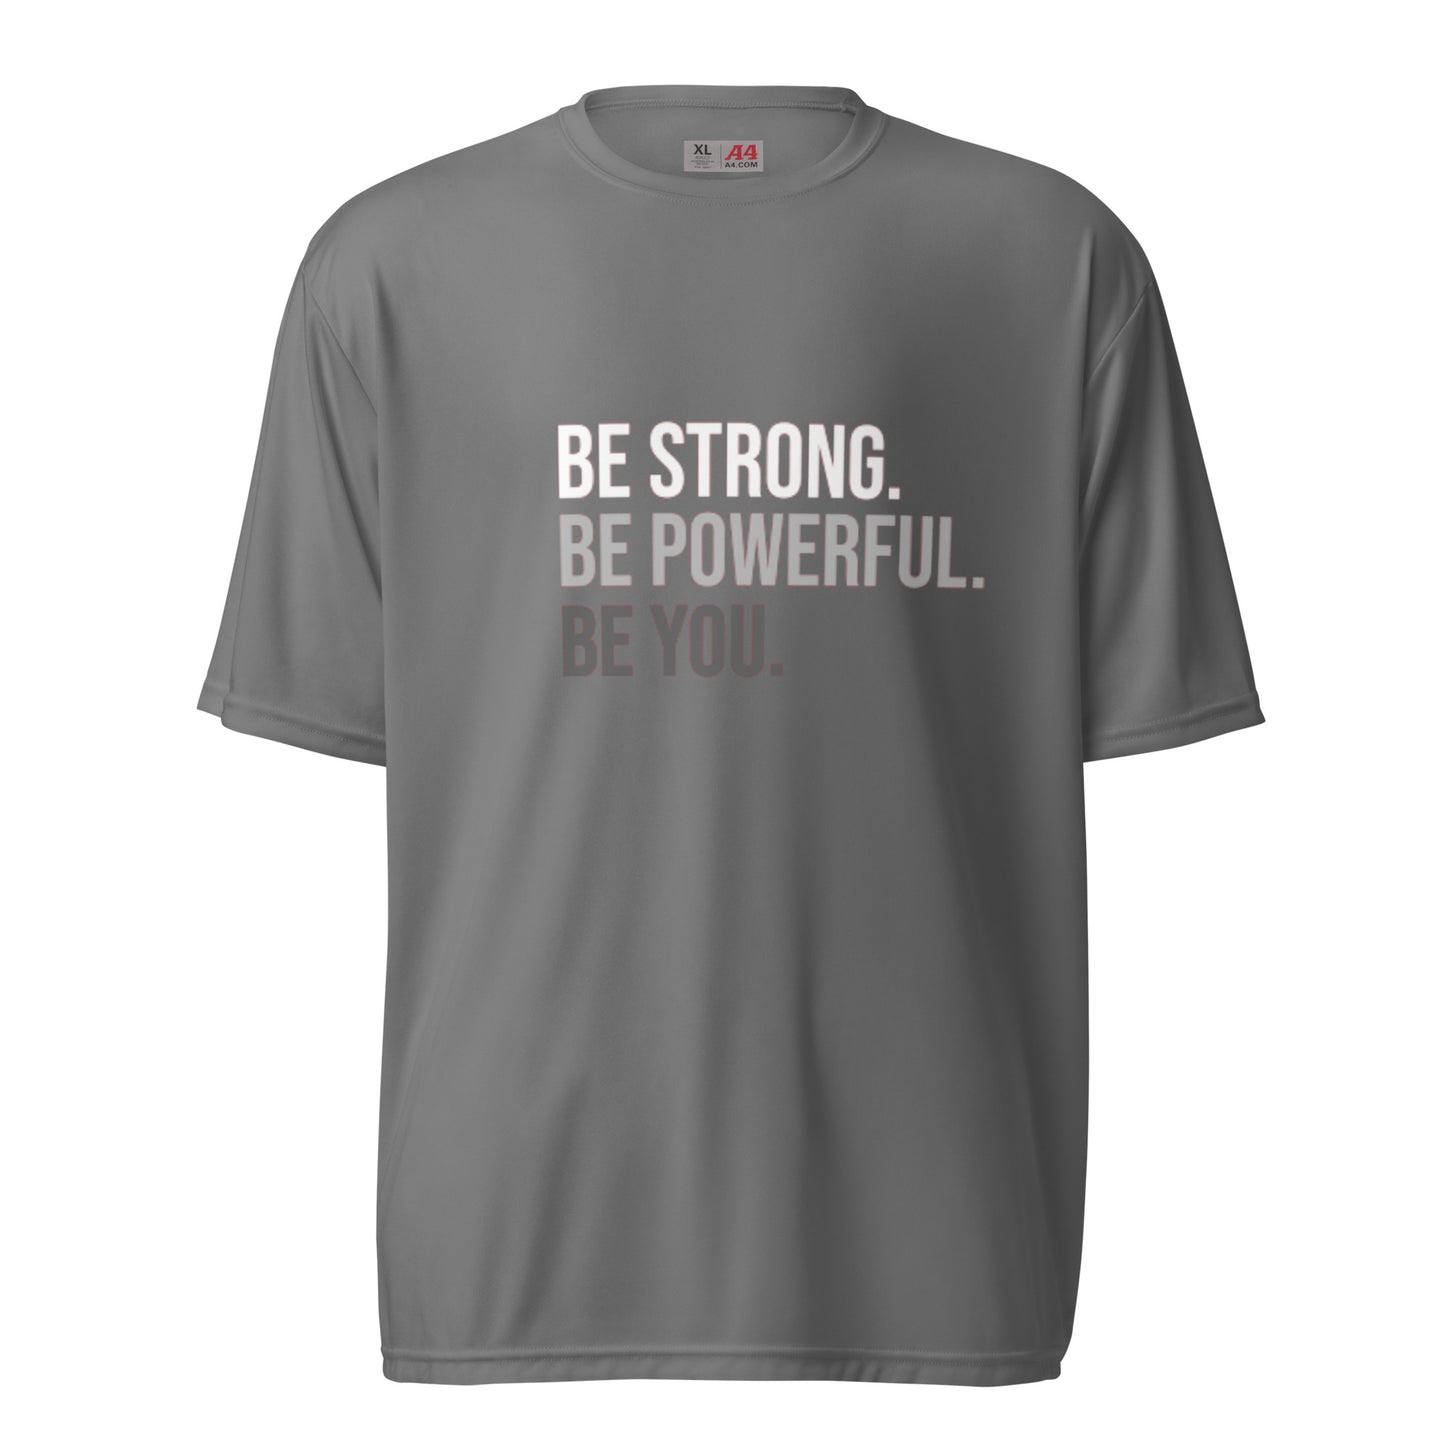 Titan Genetix - Be - Unisex Performance Jersey T-Shirt